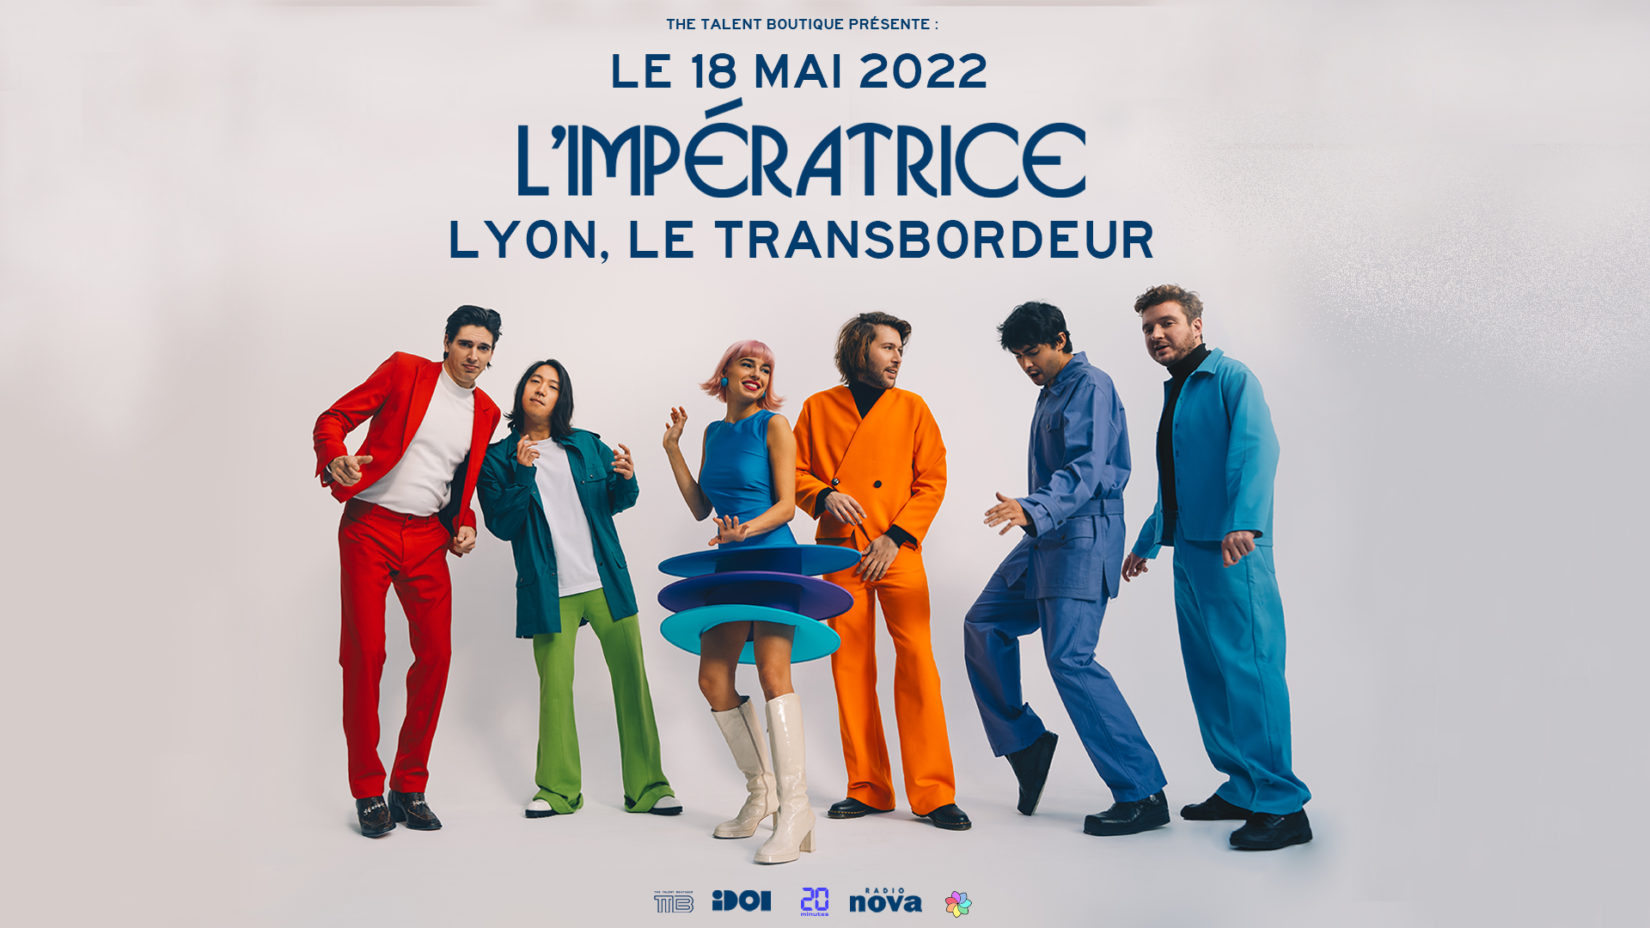 L'Impératrice • TAKO TSUBO TOUR 2022 • Lyon • Le Transbordeur